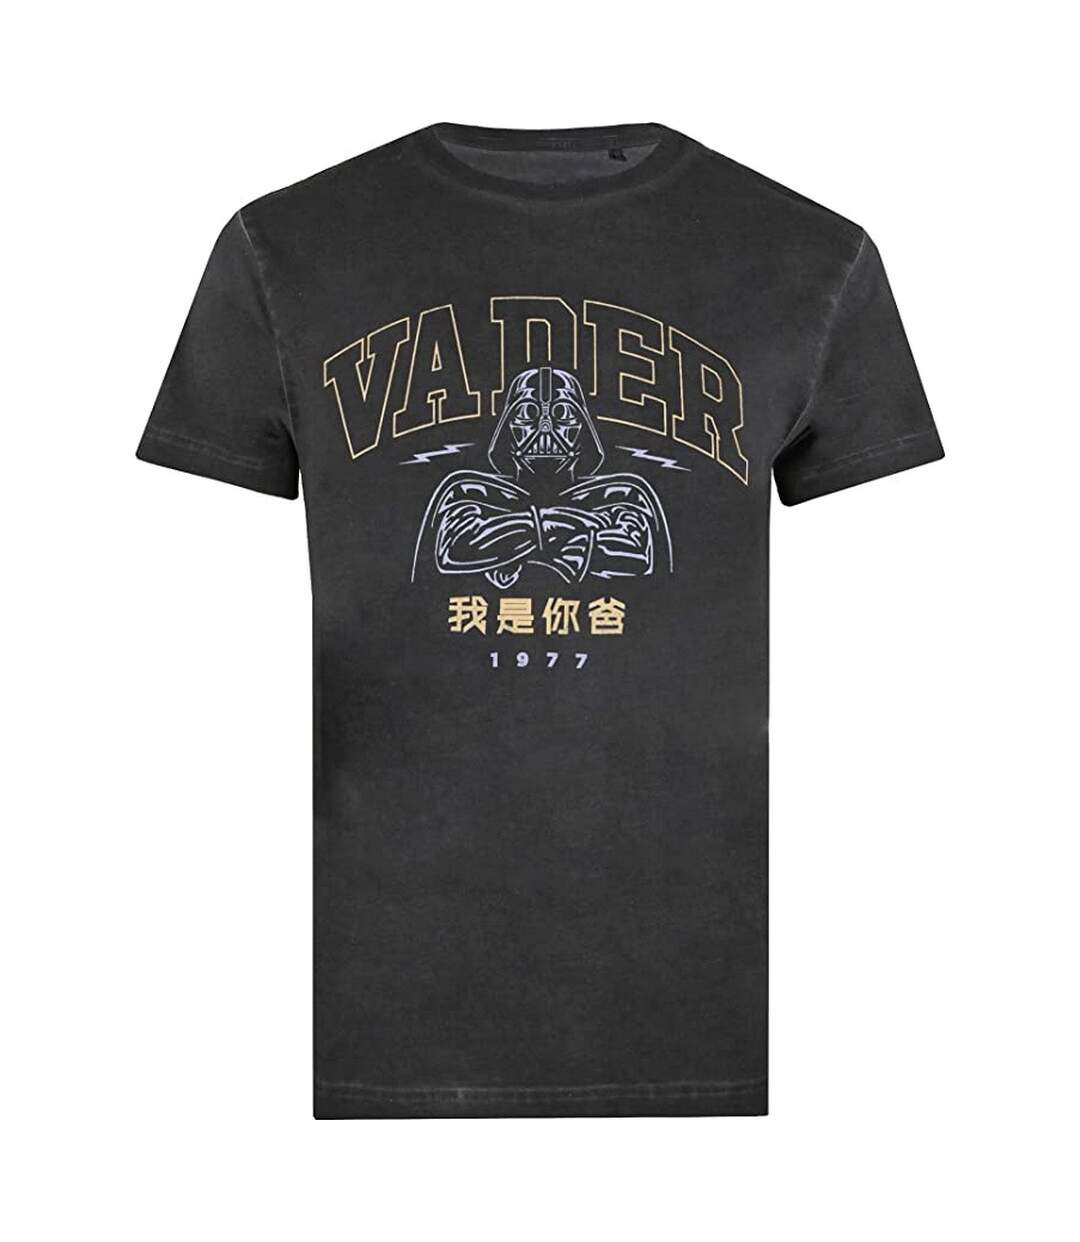 Star Wars - T-shirt VADER - Homme (Noir) - UTTV1501